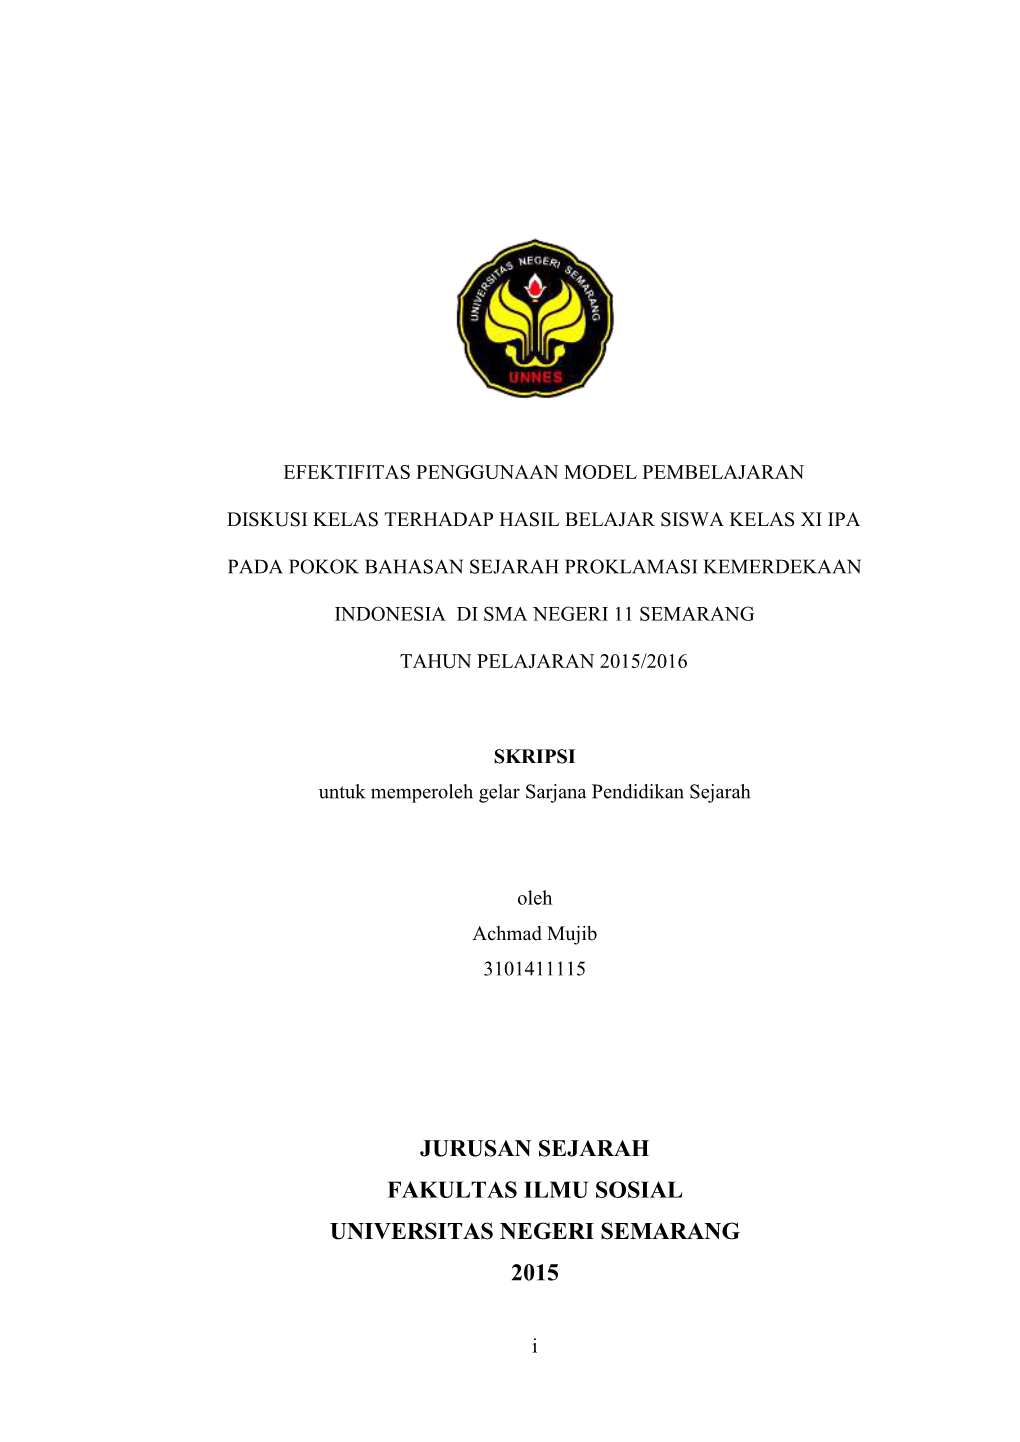 Jurusan Sejarah Fakultas Ilmu Sosial Universitas Negeri Semarang 2015